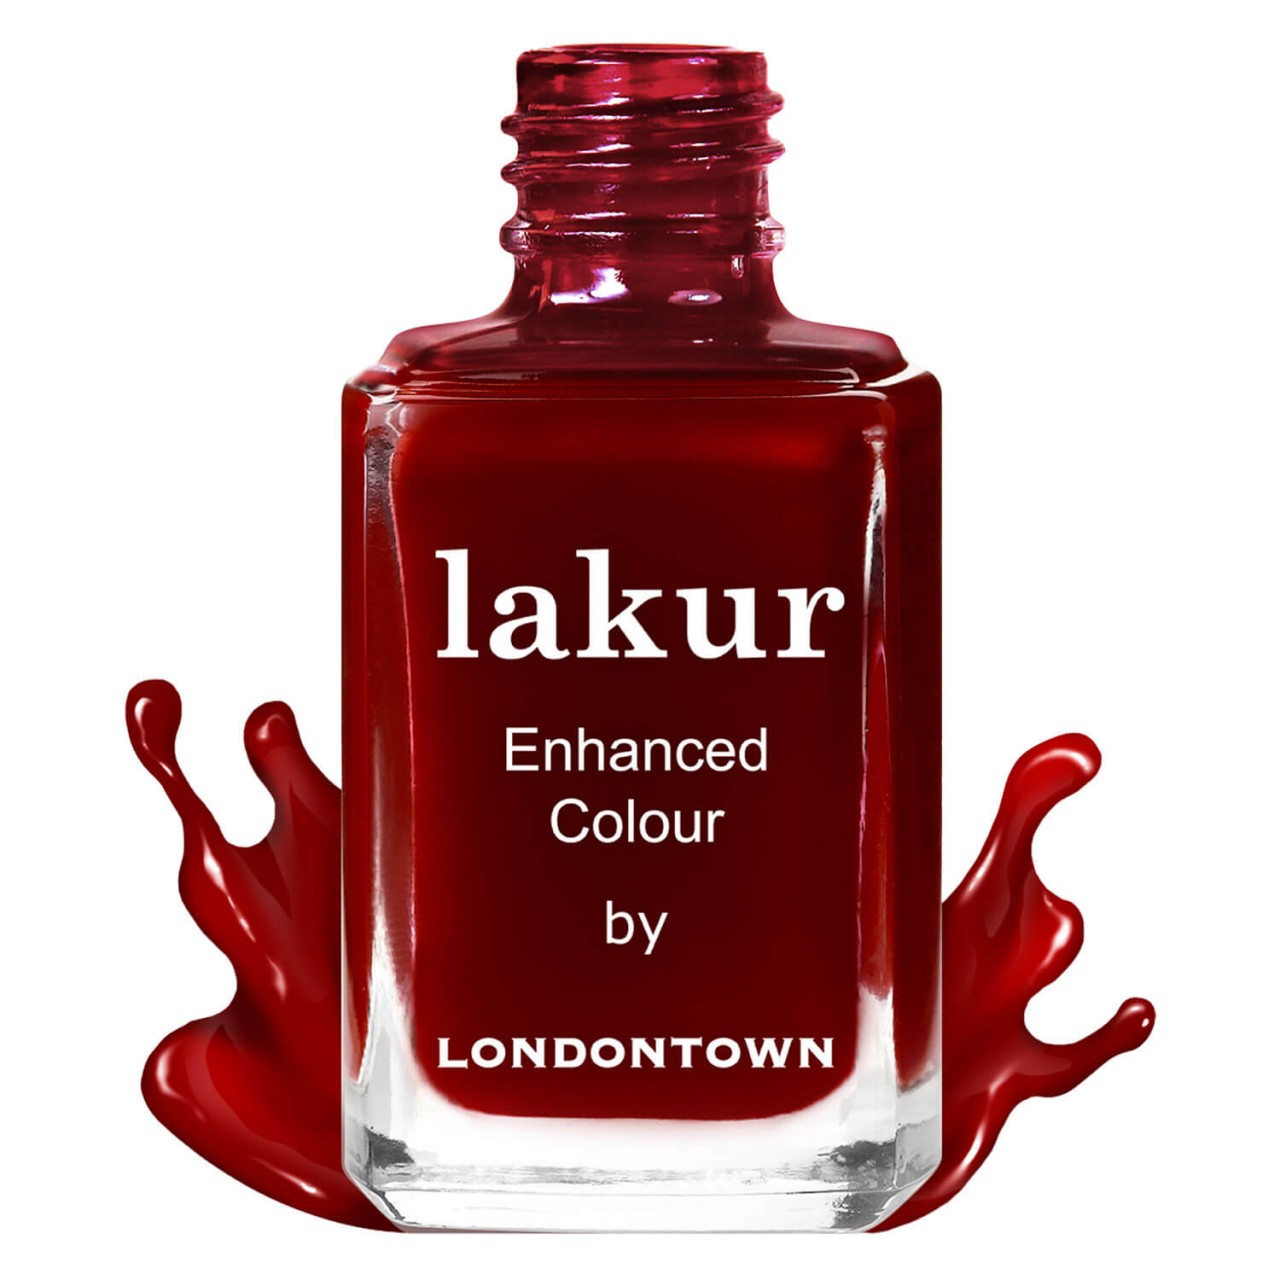 lakur - Lady Luck von Londontown